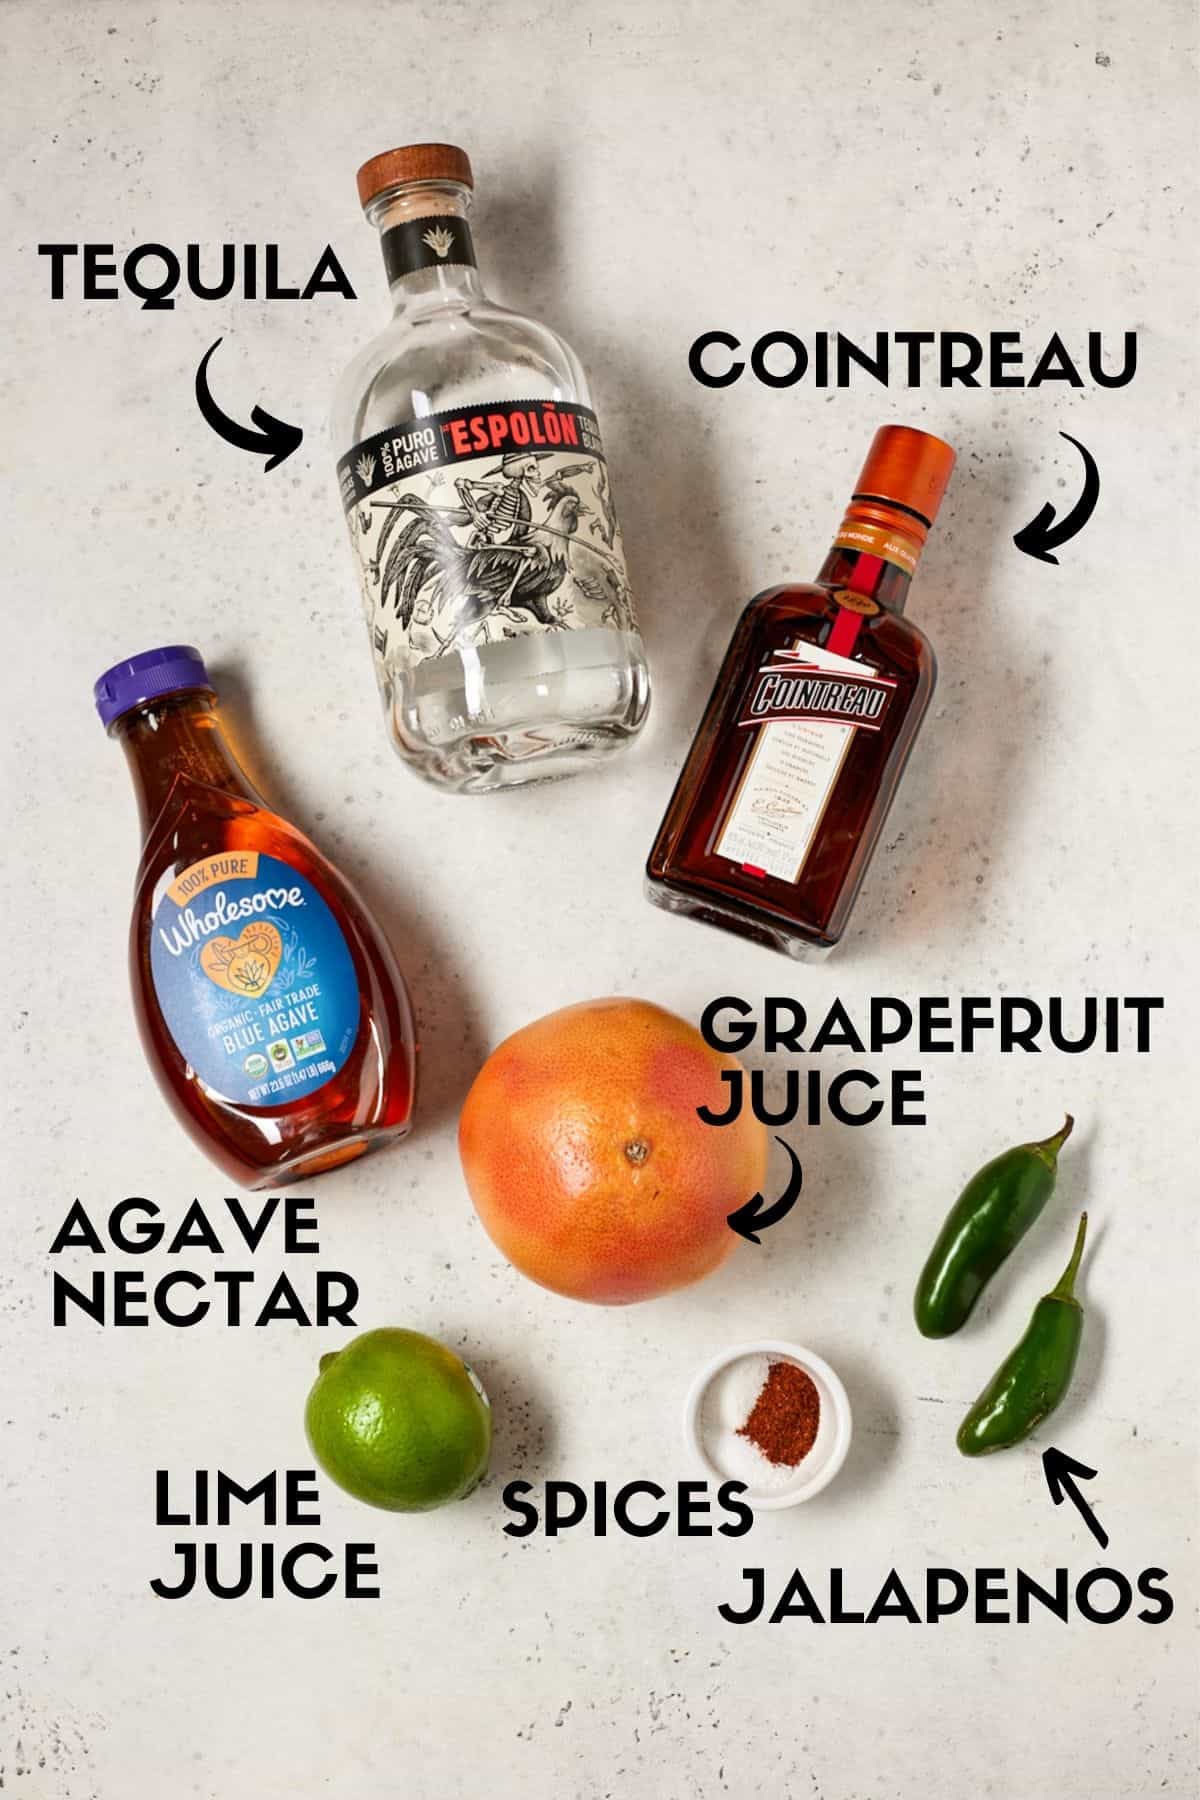 Grapefruit margarita ingredients including tequila, cointreau and grapefruit juice. 